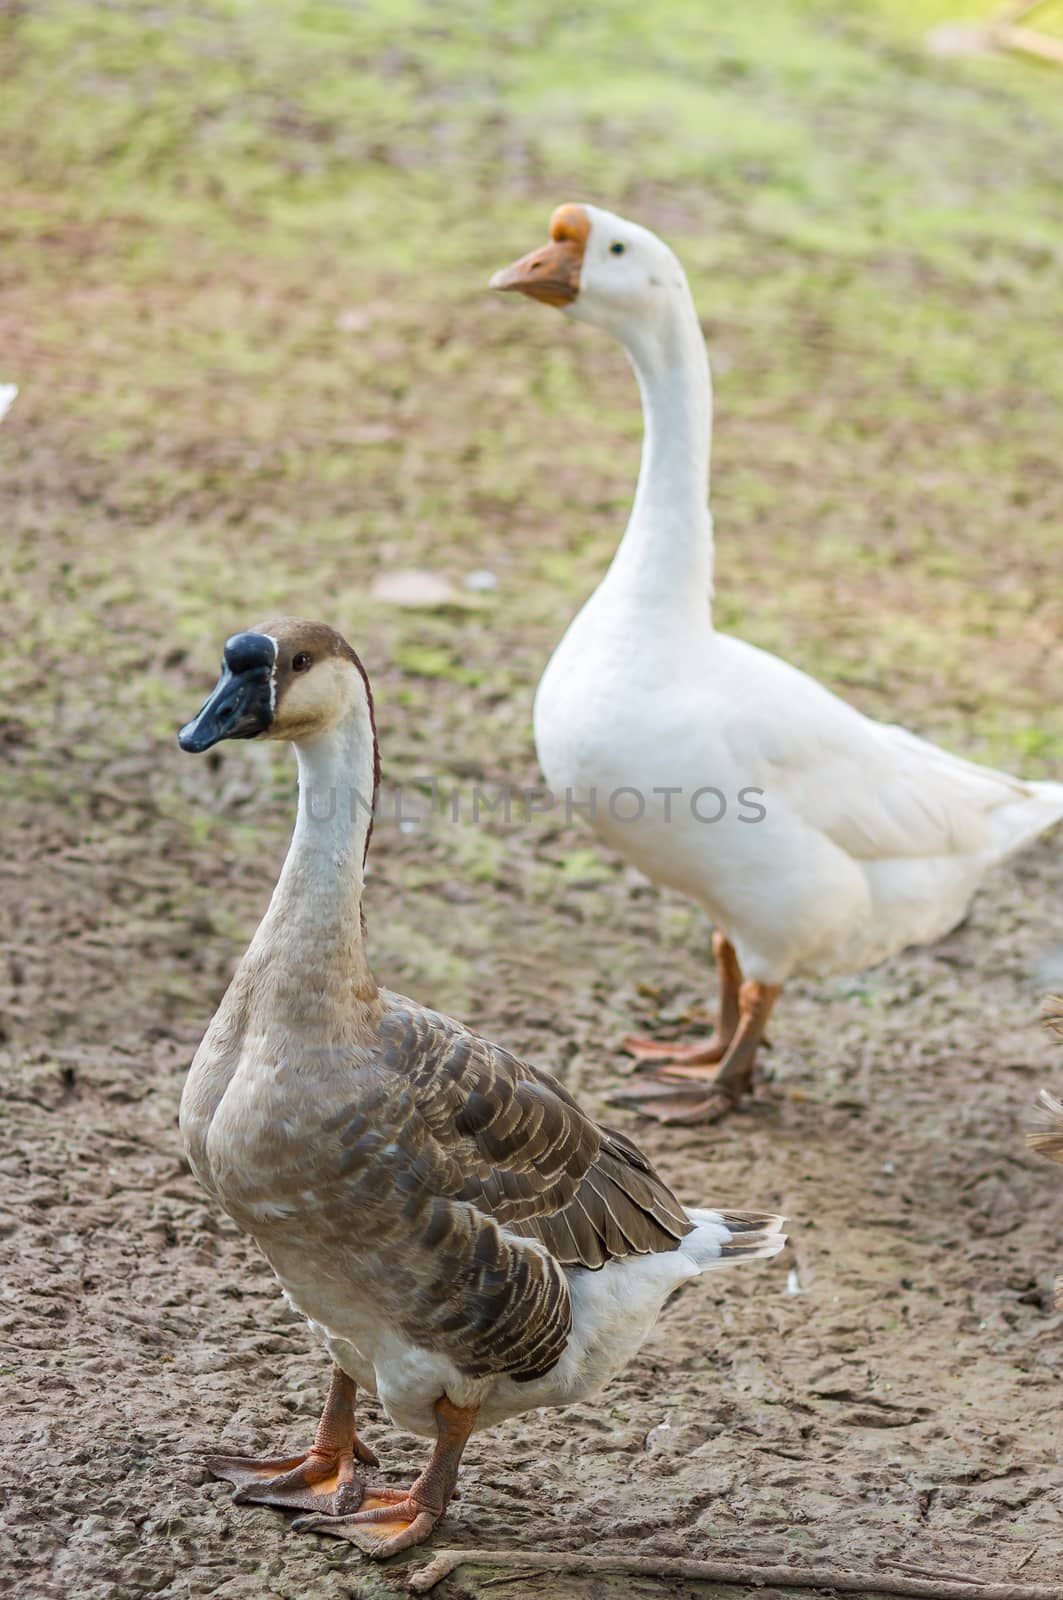 Domestic Goose (Embden goose)